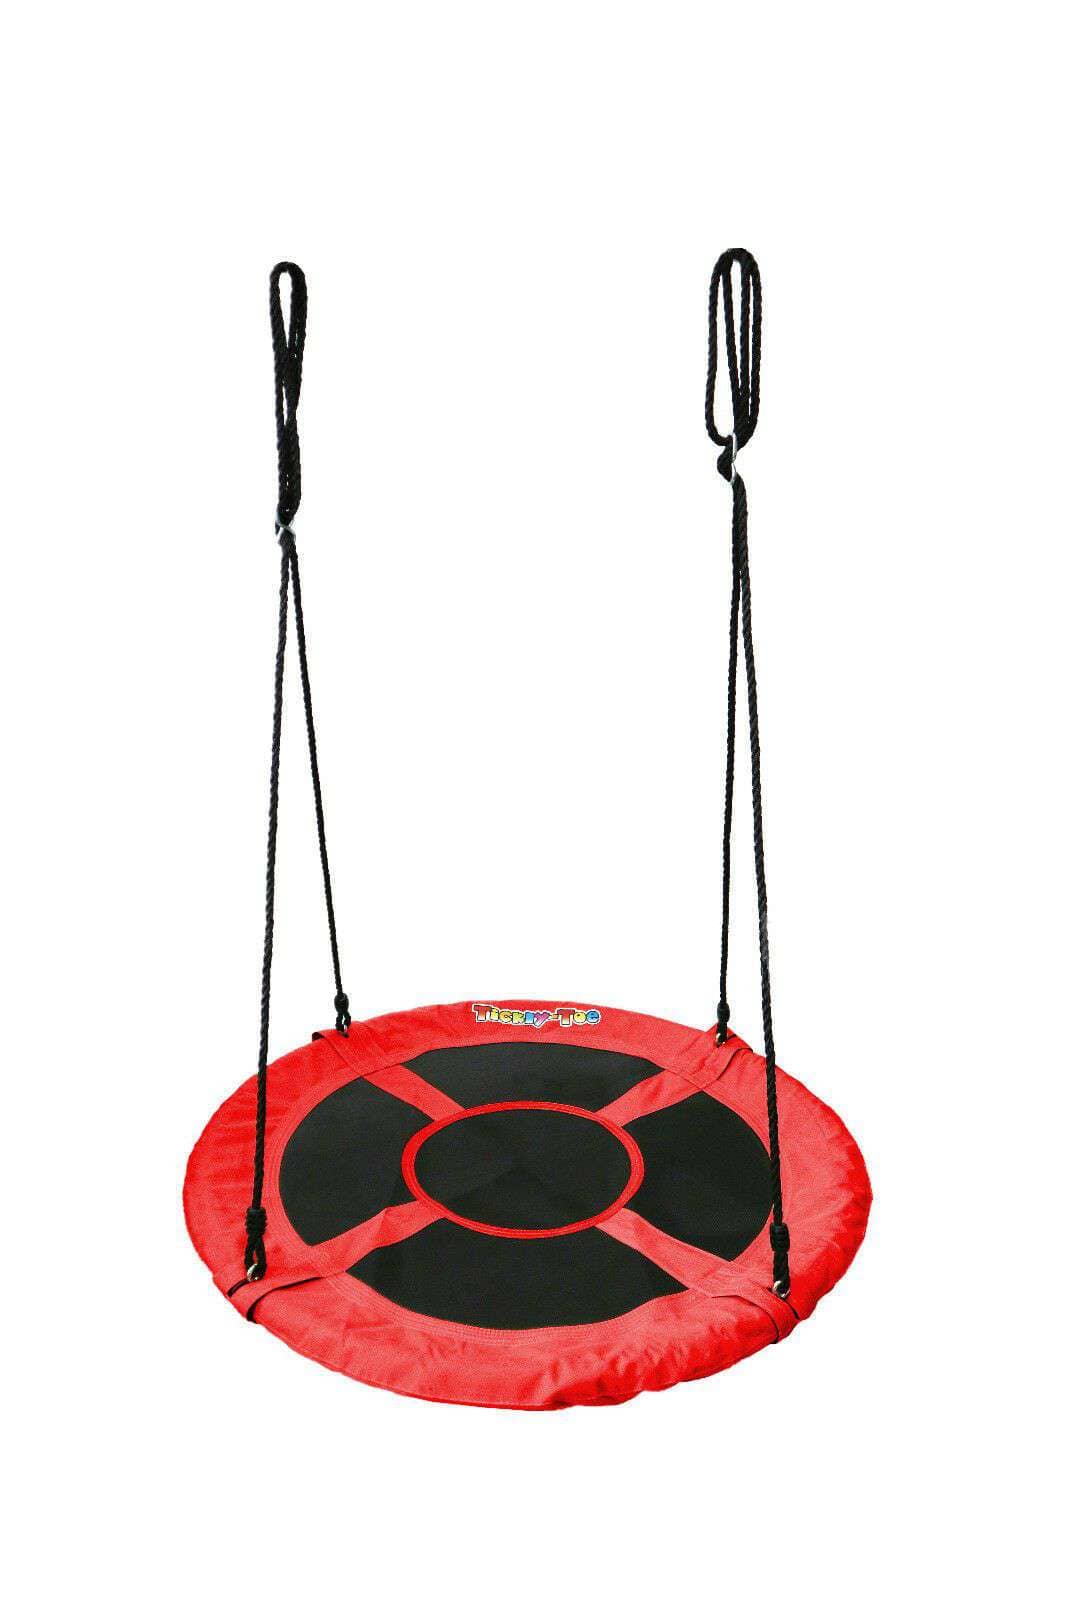 giant-tree-swing-100cm-outdoor-hammock-chair-kids-children-yard-play-equipment